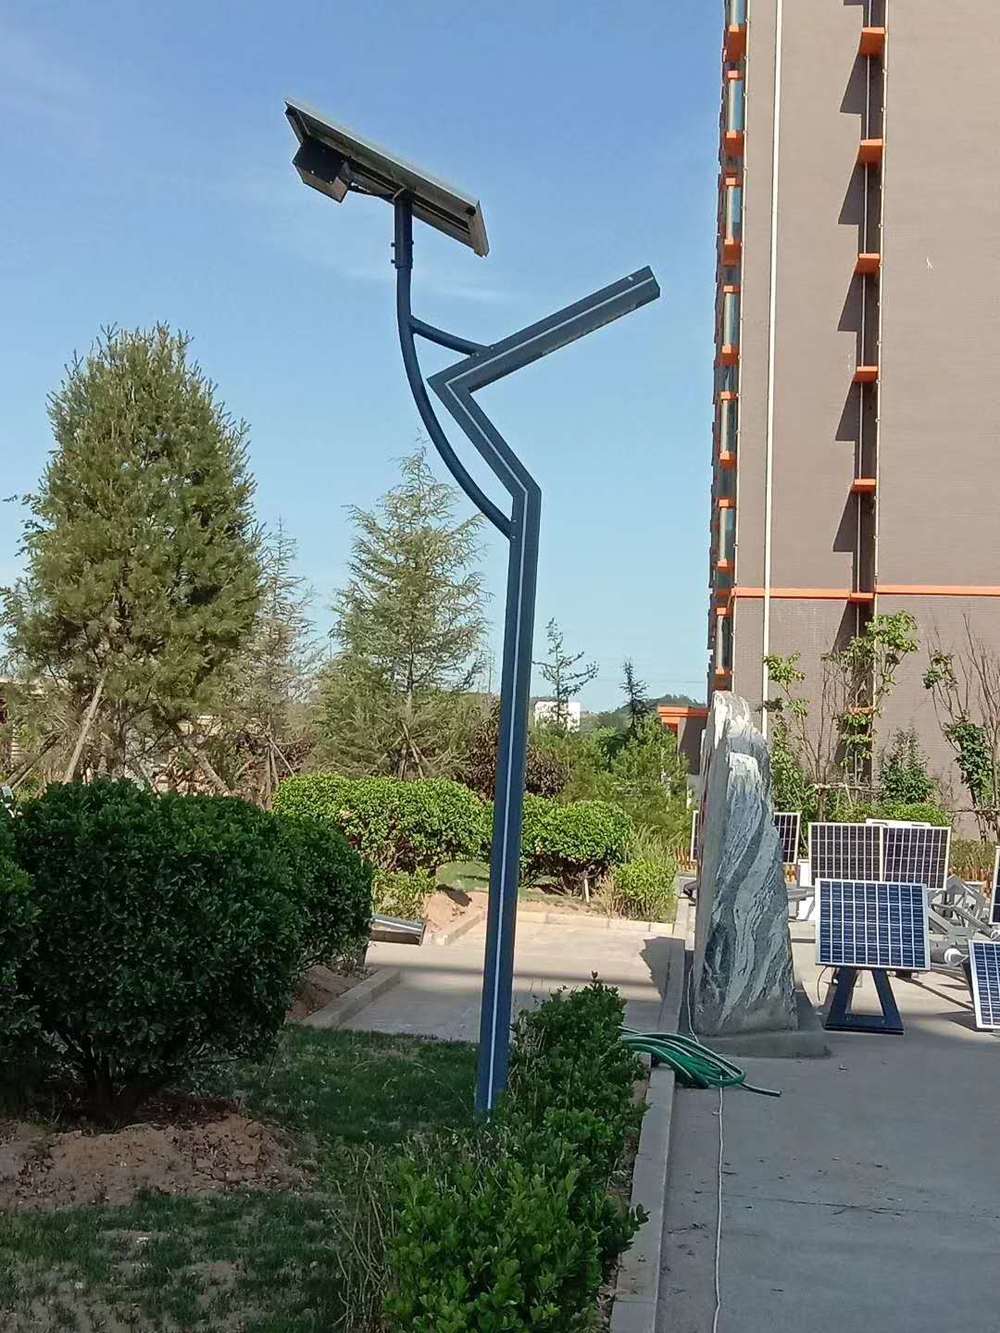 LED solar national street lamp, photovoltaic solar street lamp